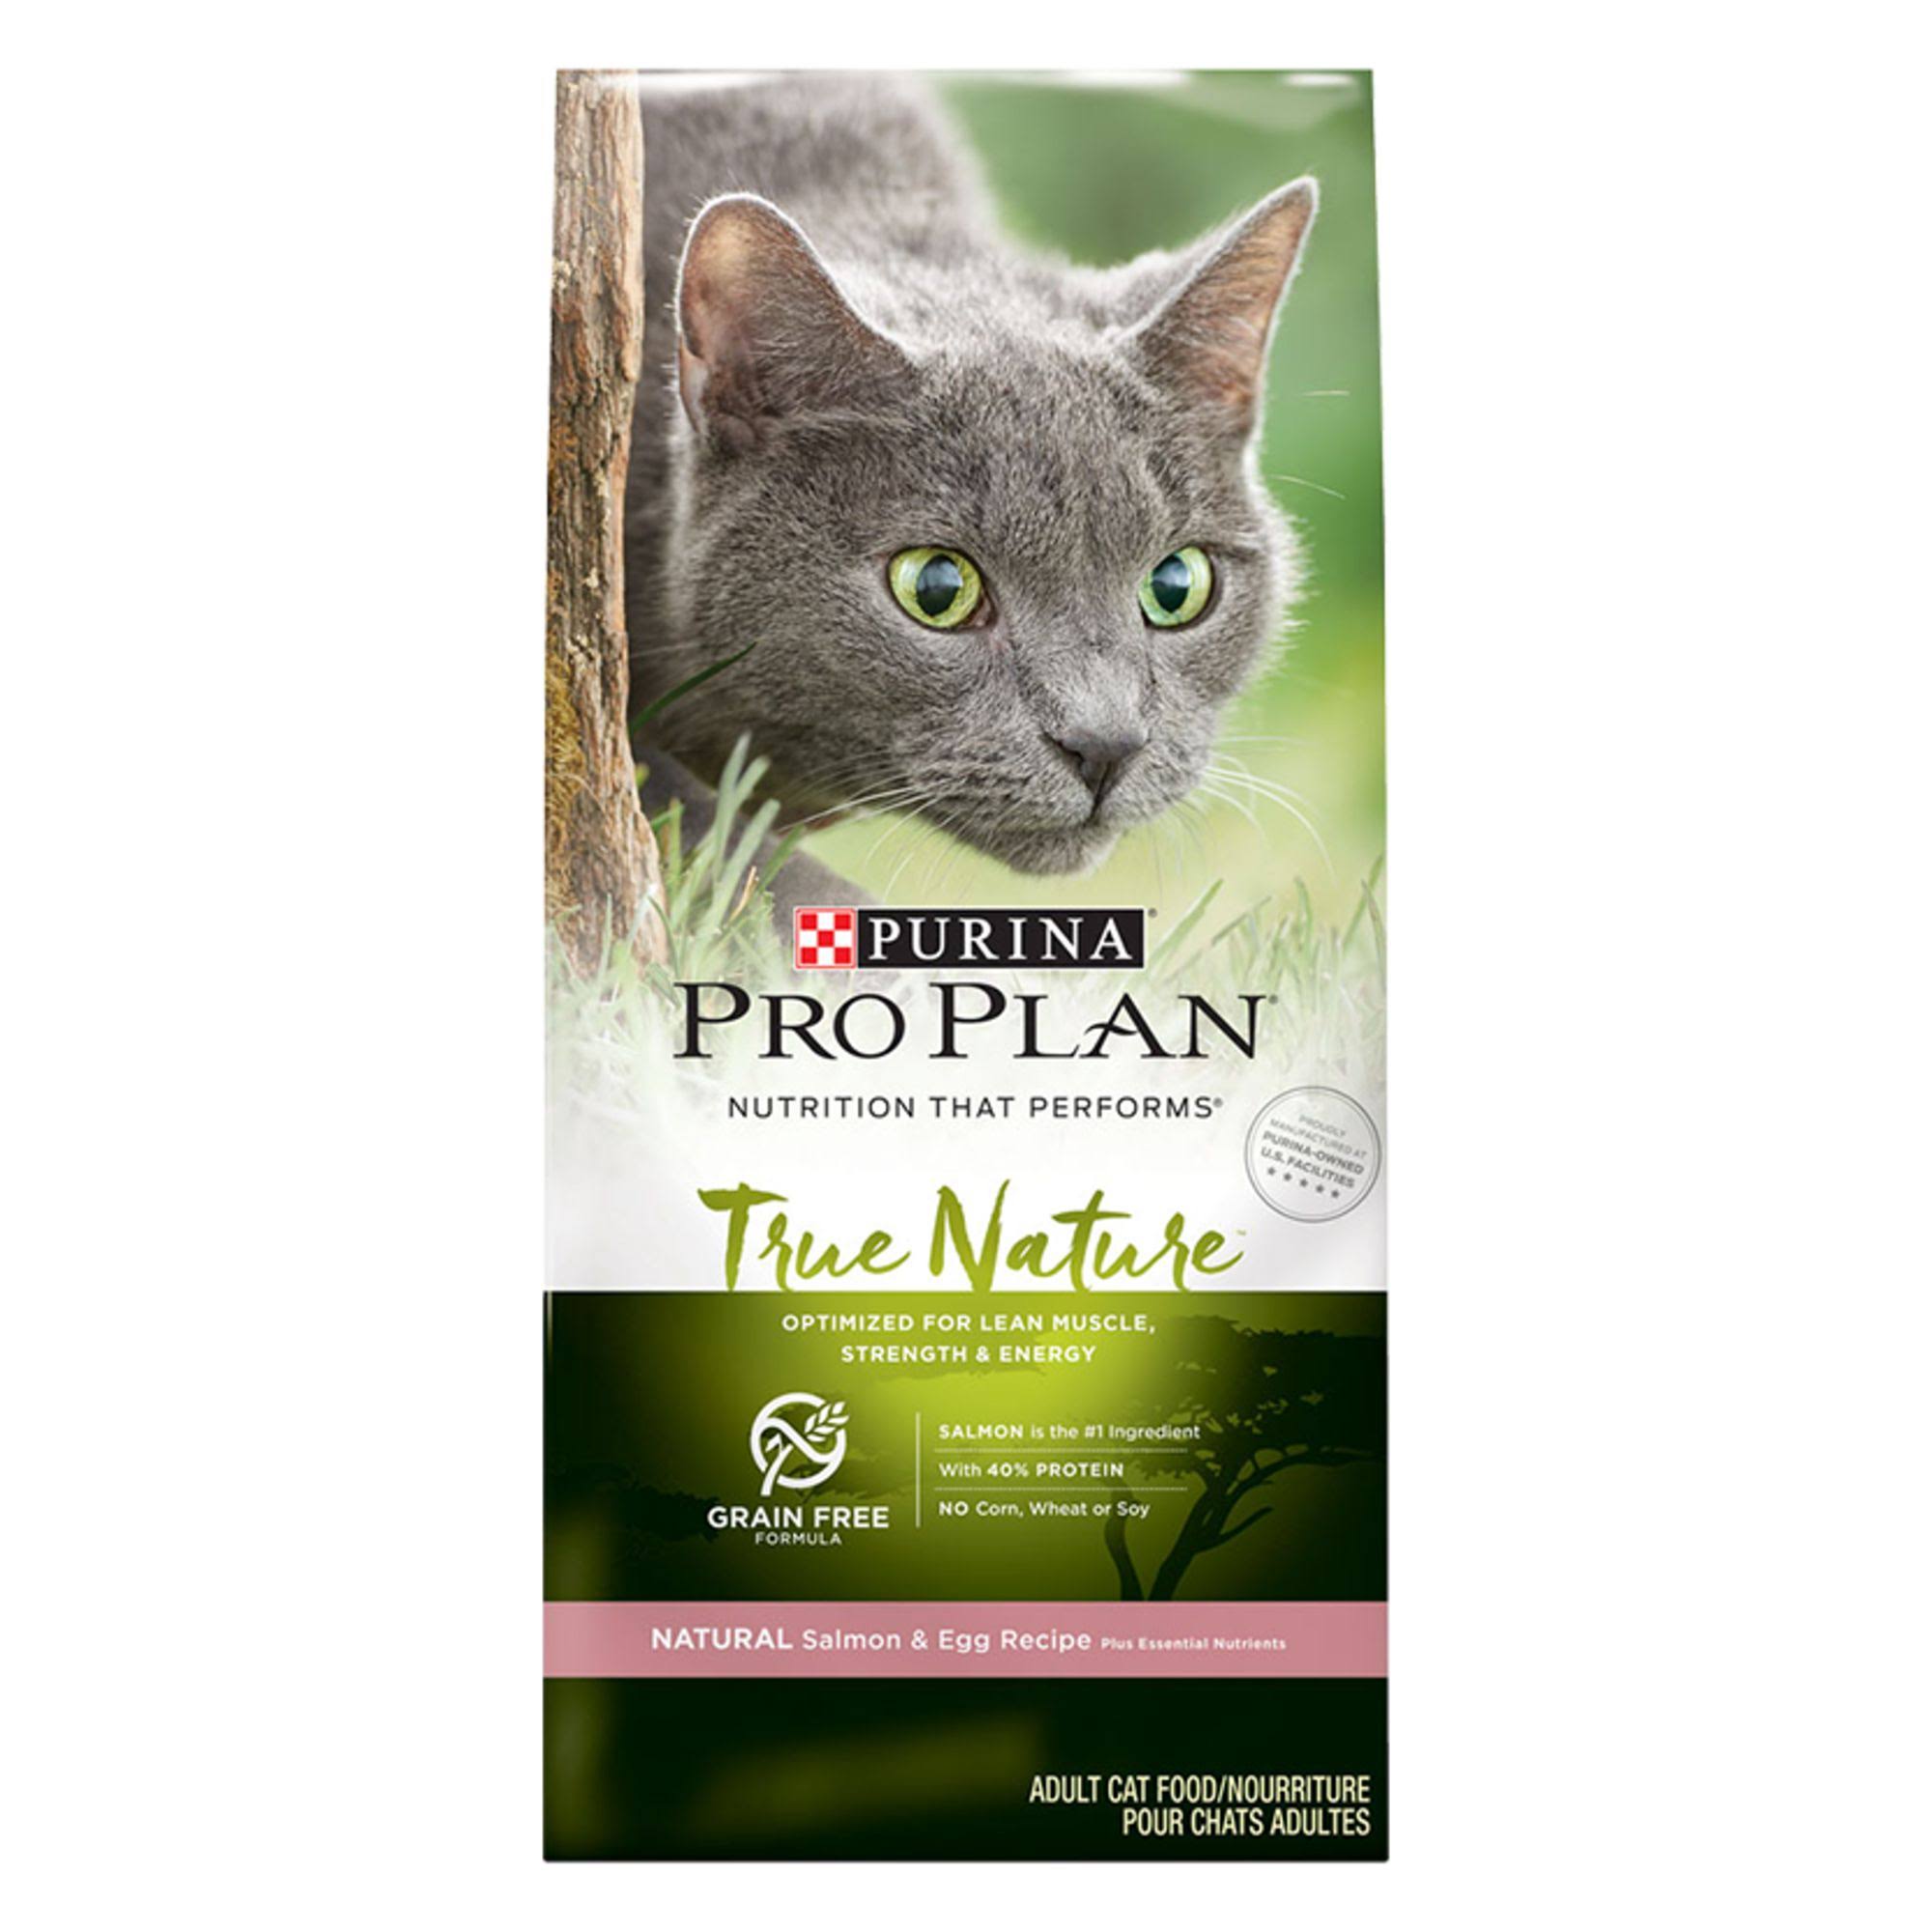 Purina Pro Plan Grain Free, Natural Dry Cat Food, True Nature Natural Salmon & Egg Recipe - 1.5kg. Bag | Cats